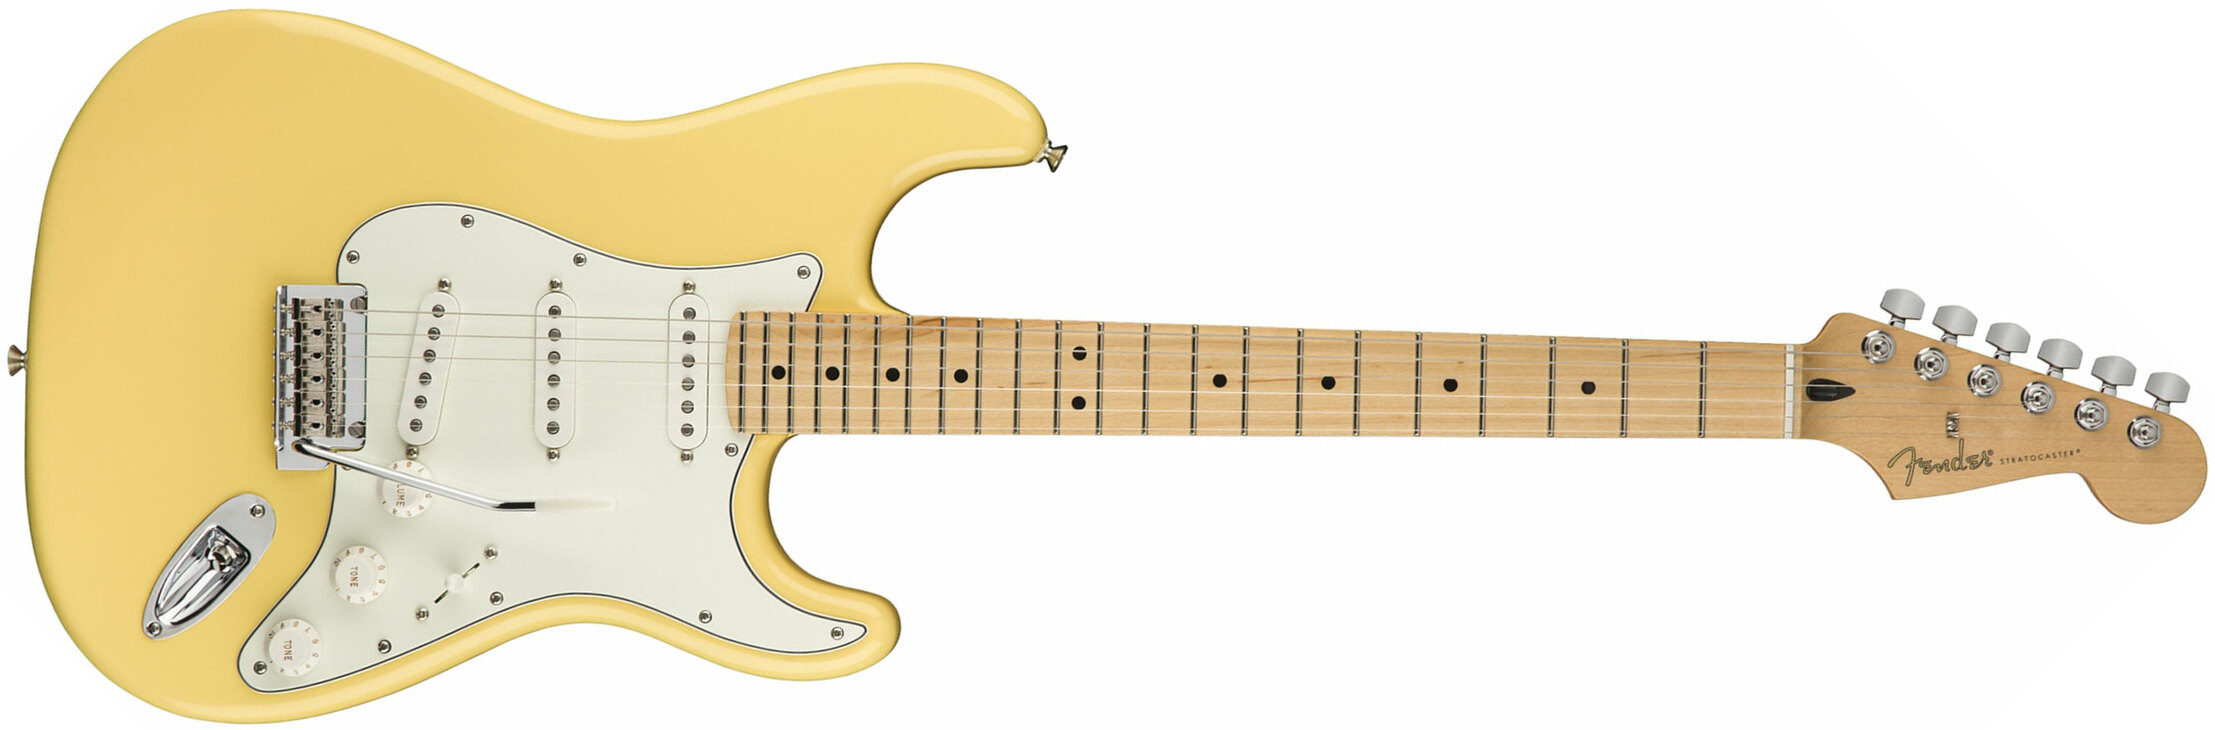 Fender Strat Player Mex Sss Mn - Buttercream - Guitarra eléctrica con forma de str. - Main picture